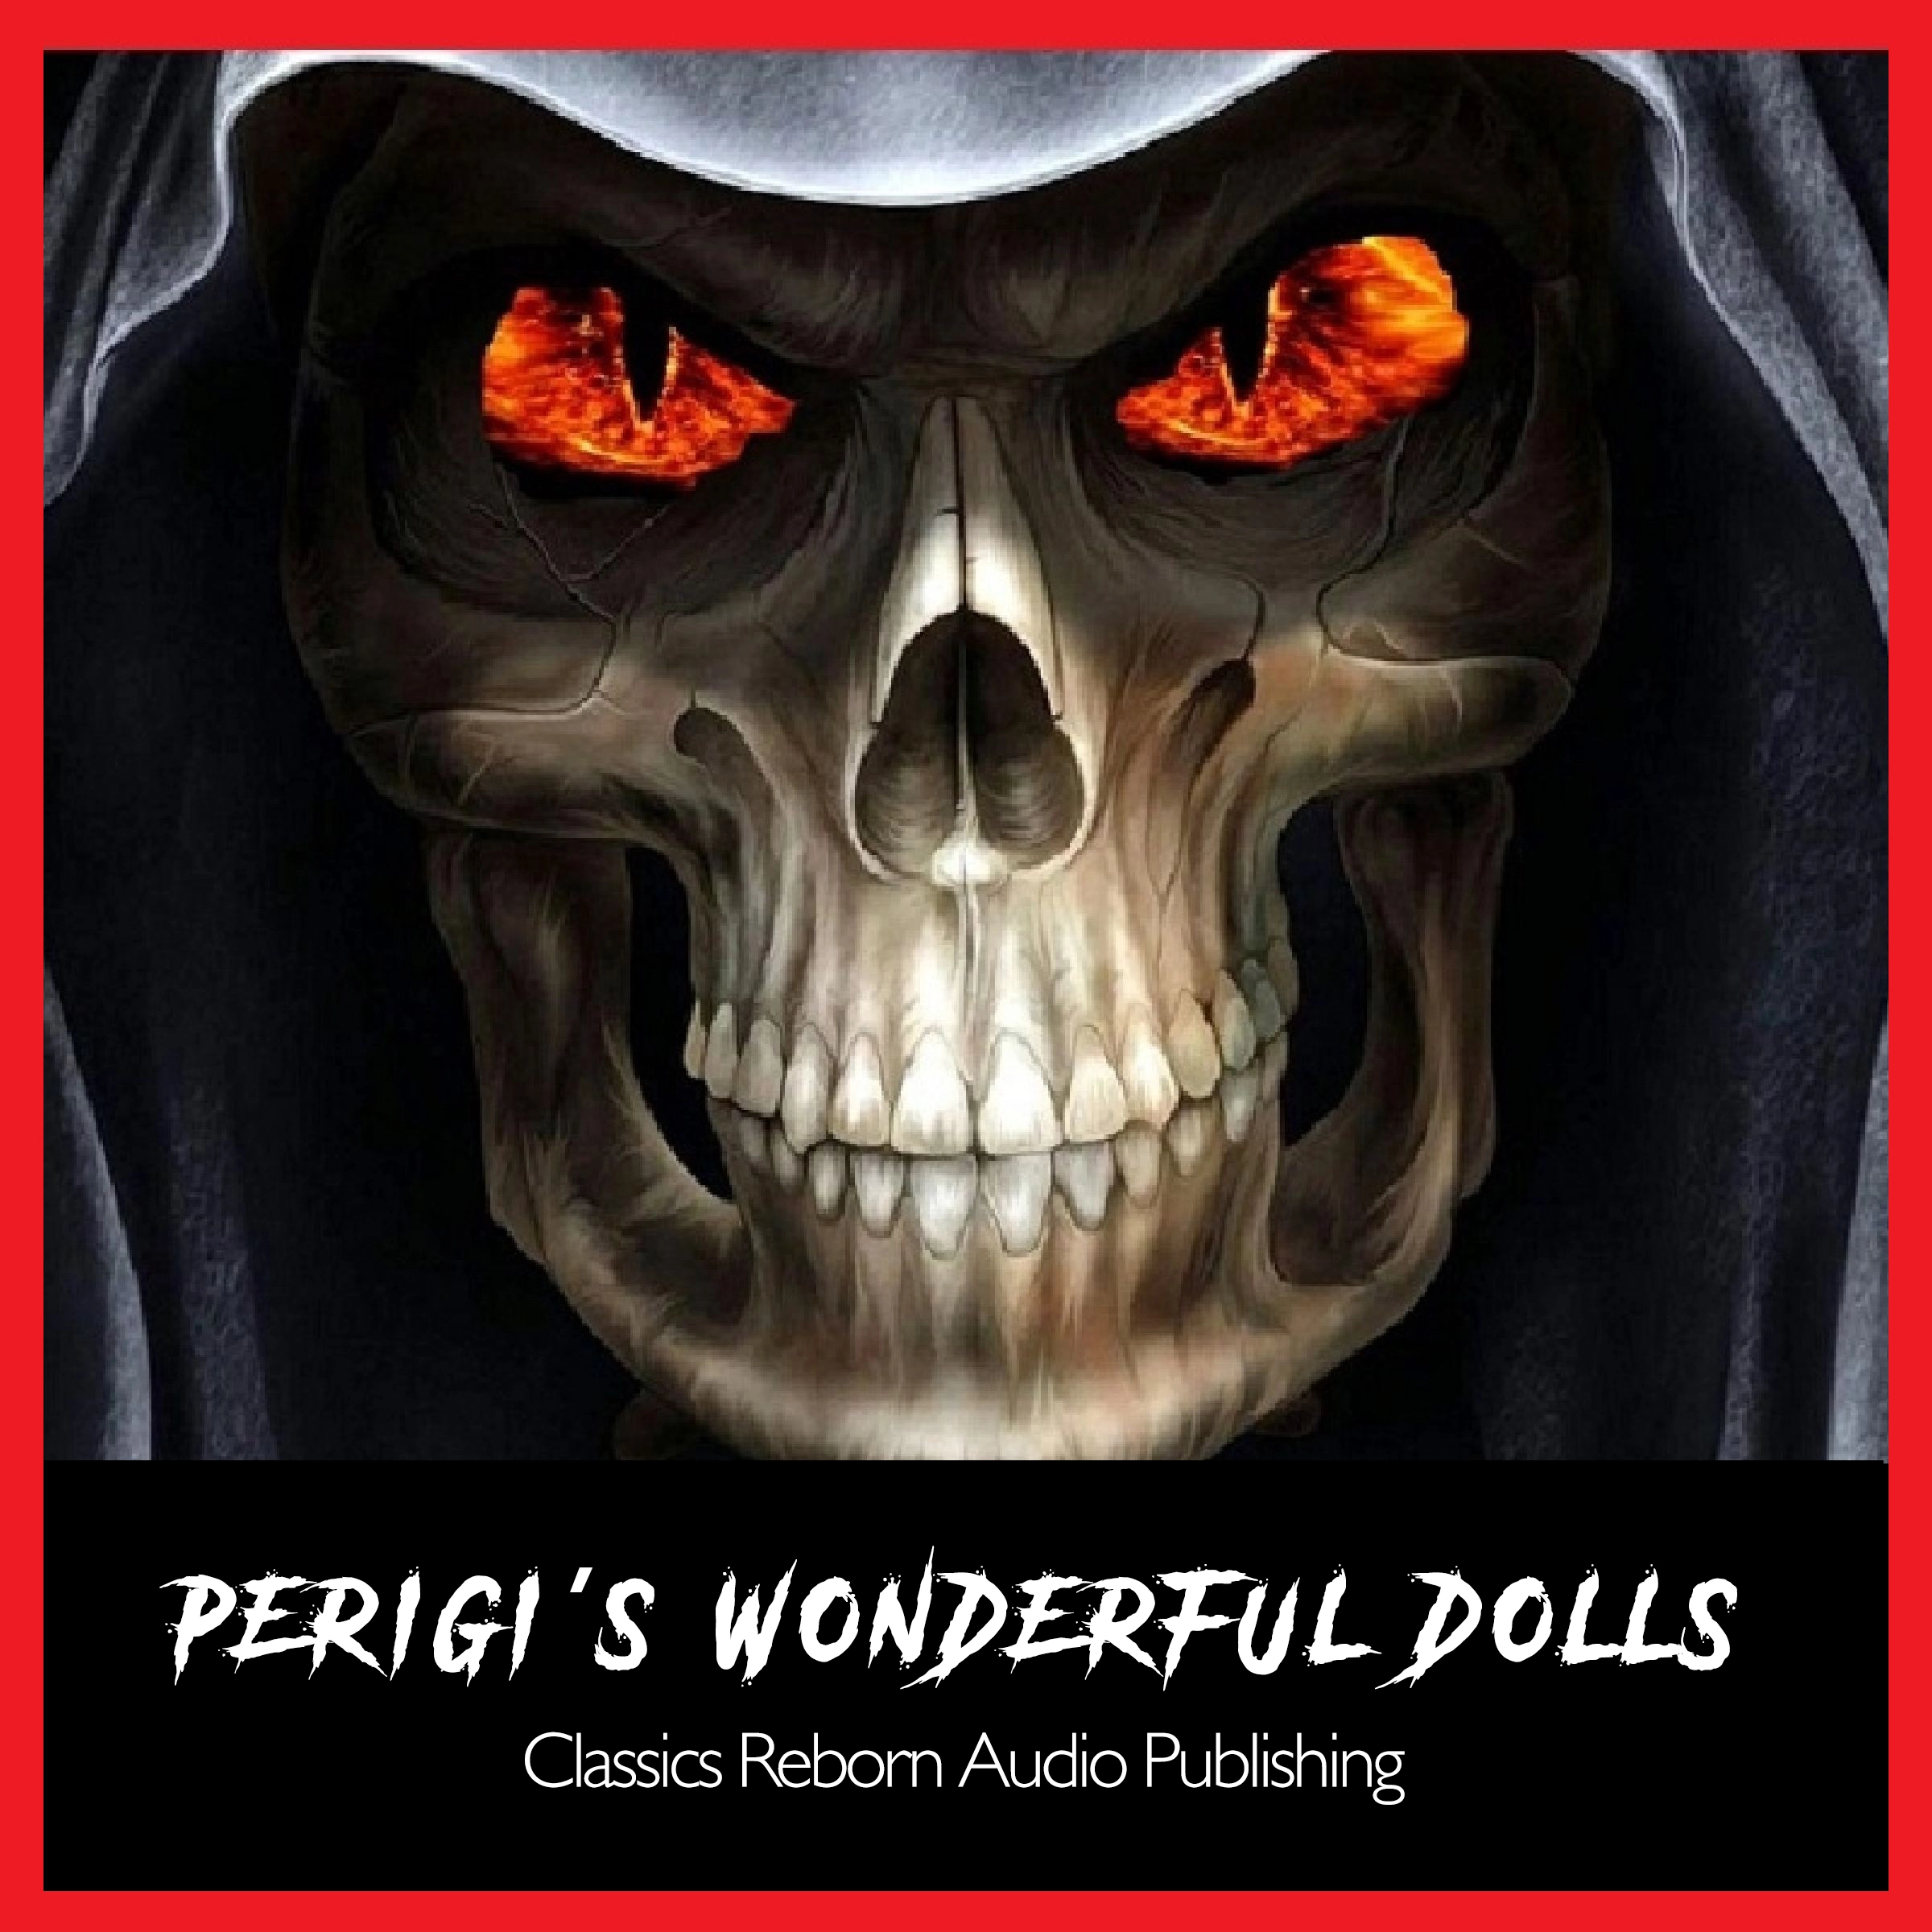 Perigi's Wonderful Dolls by Classics Reborn Audio Publishing Audiobook